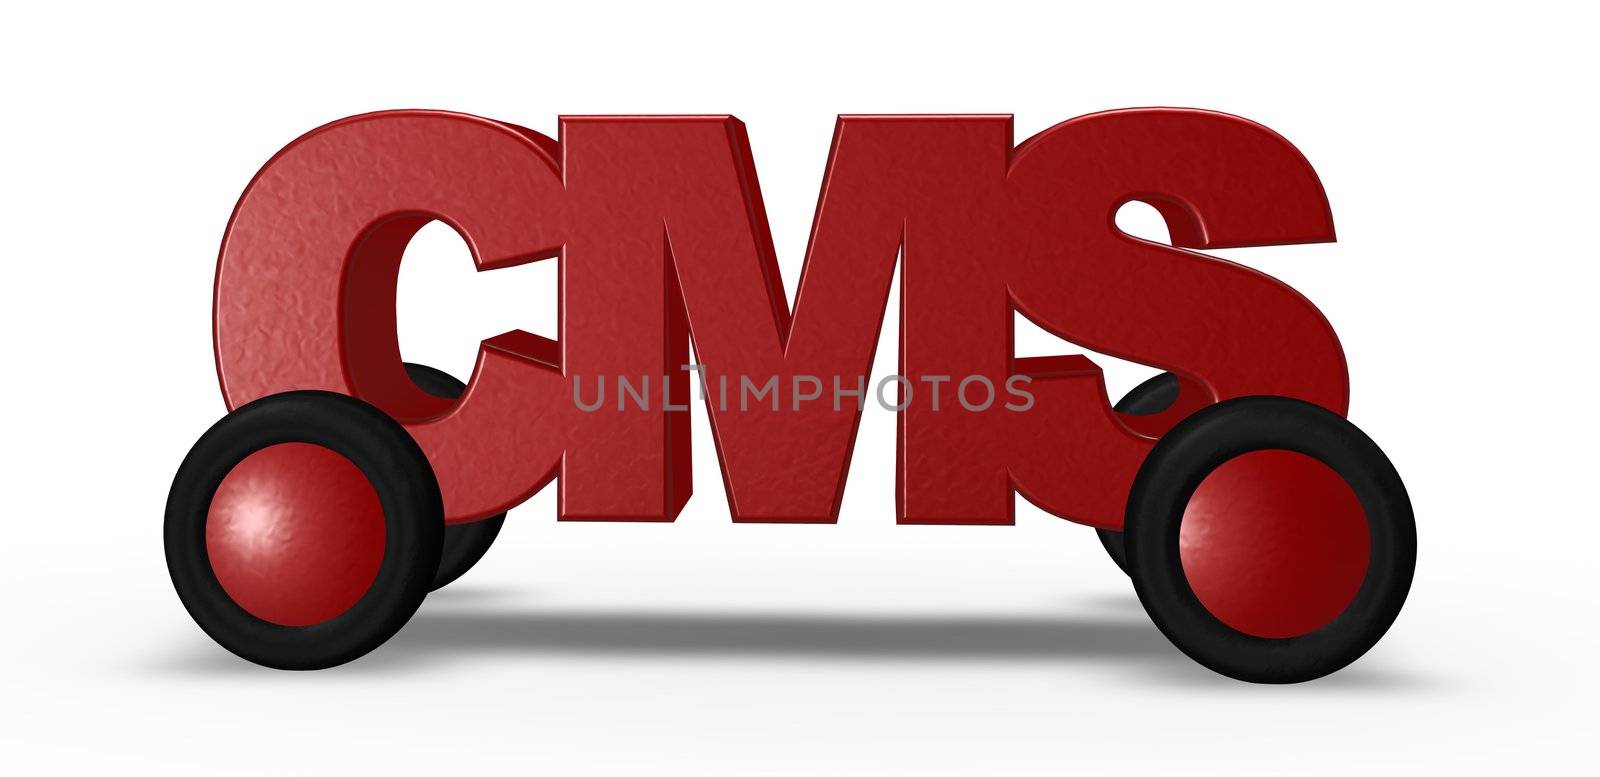 cms tag on wheels - 3d illustration